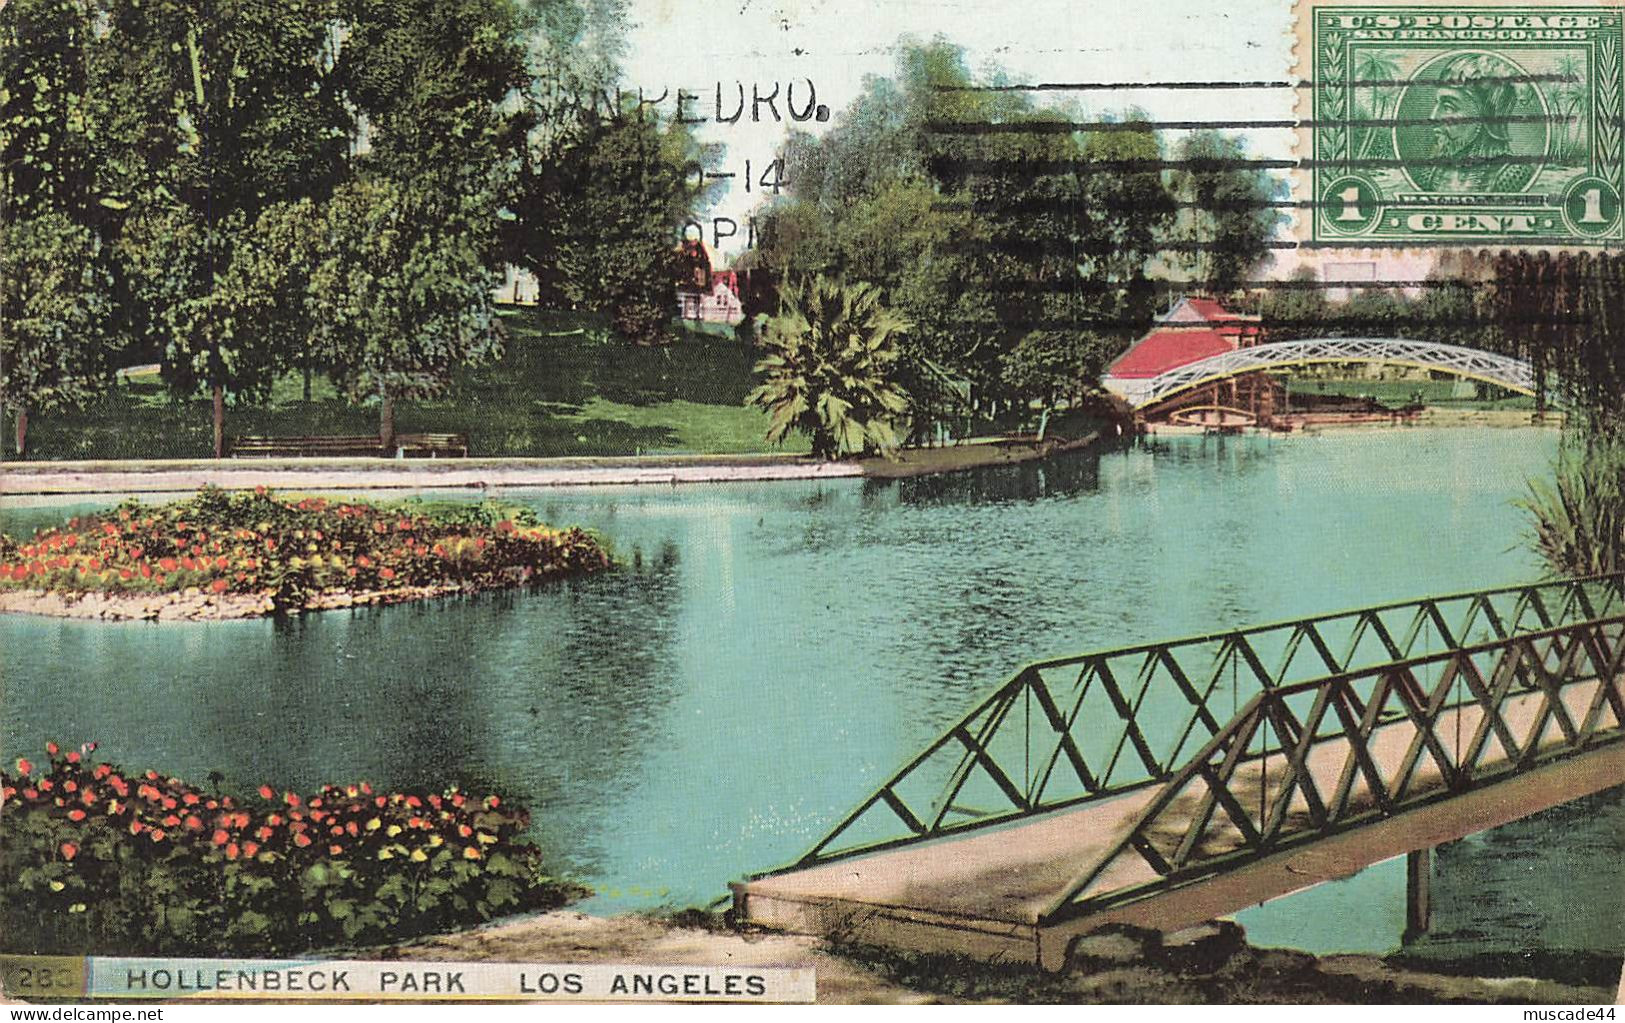 HOLLENBECK PARK - LOS ANGELES - Los Angeles